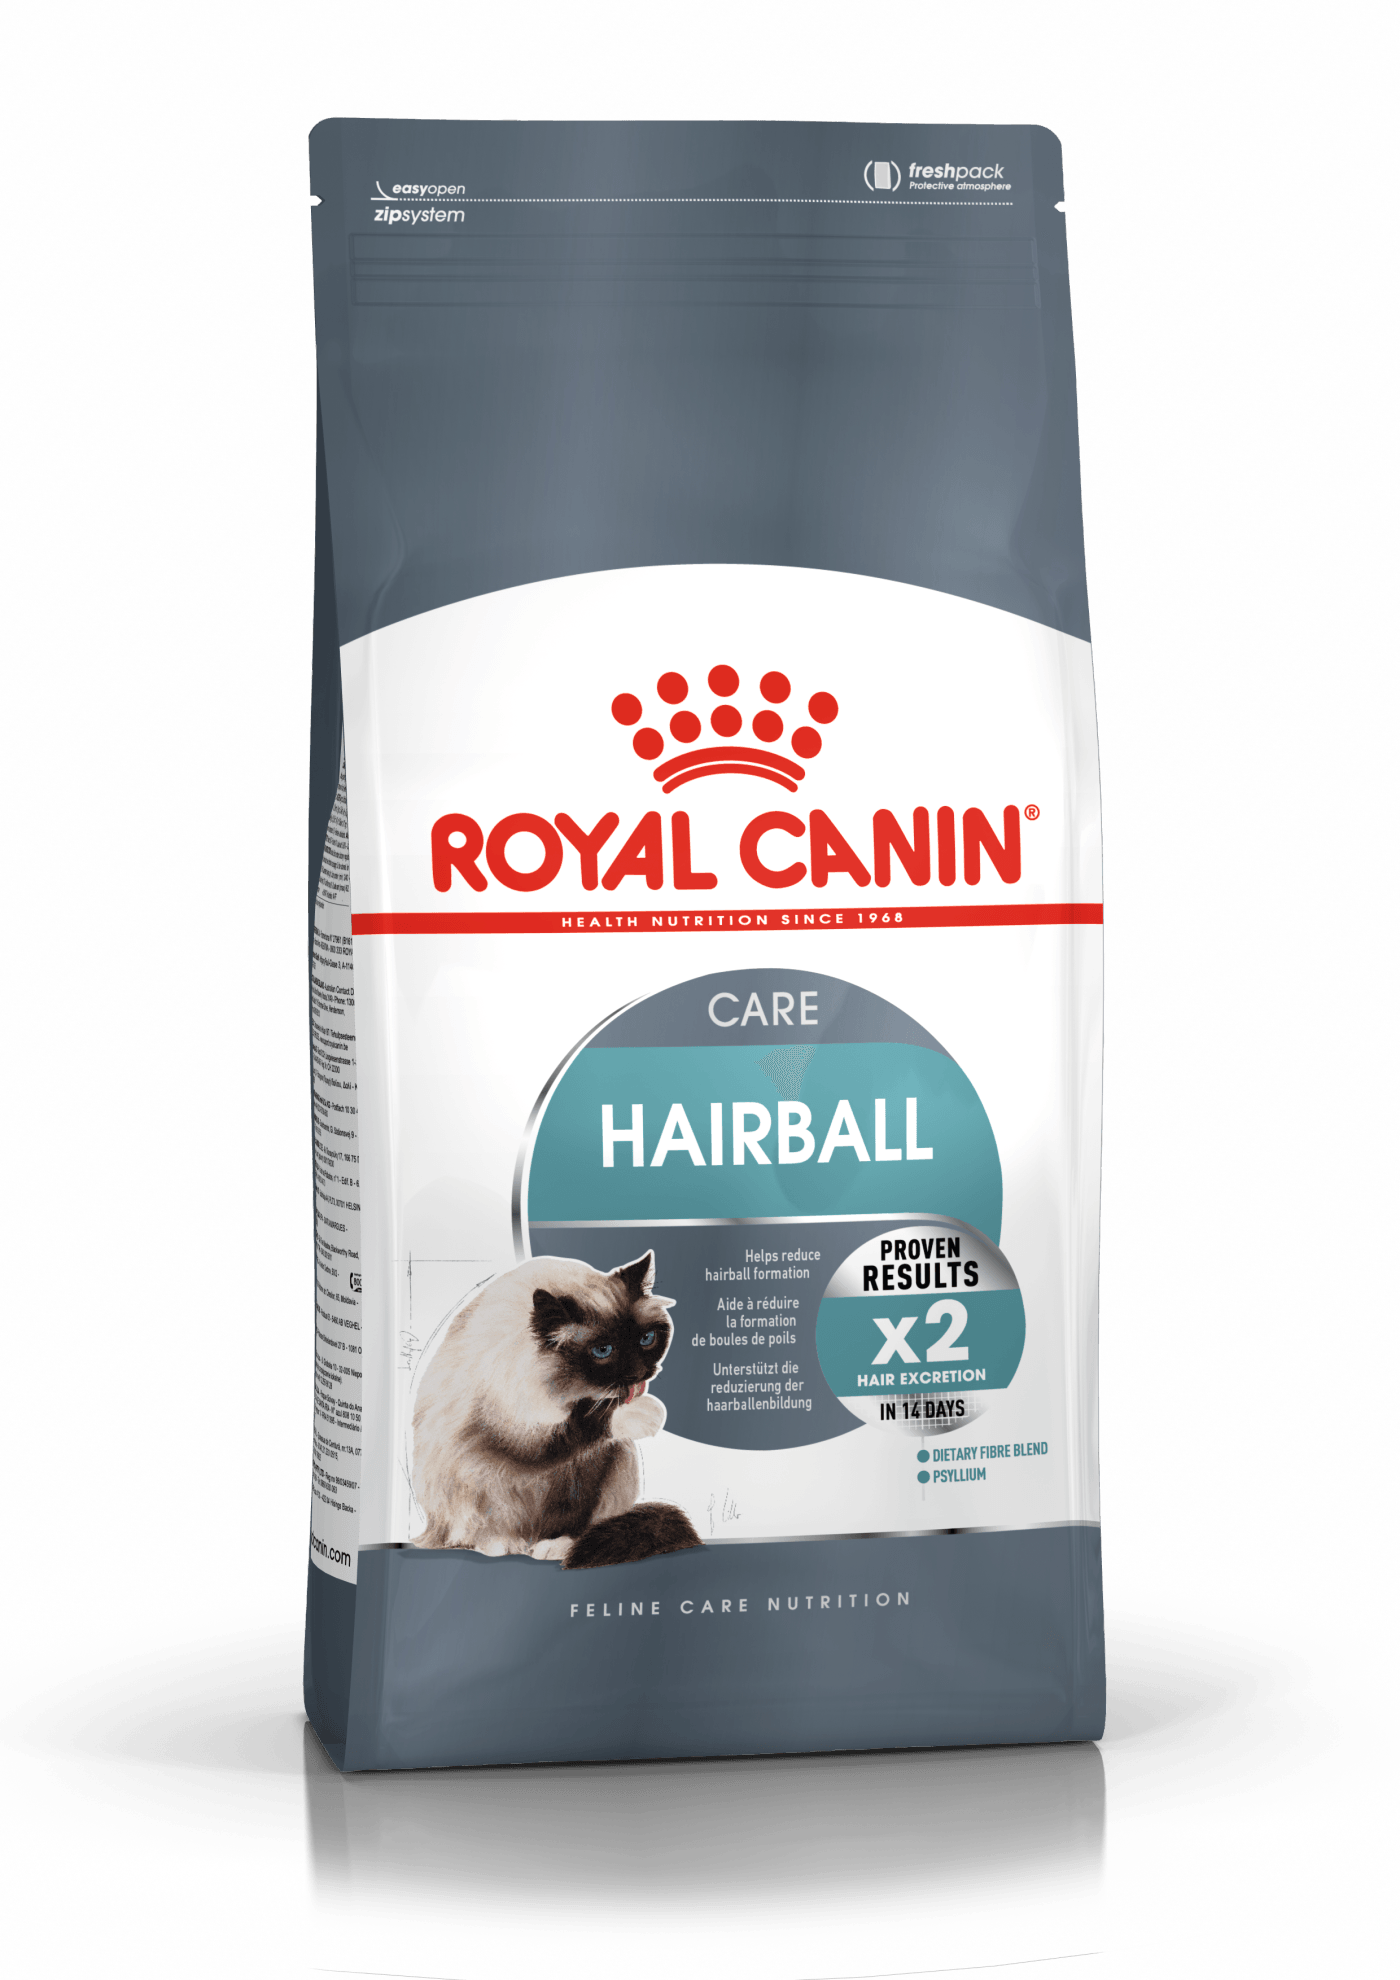 【Royal Canin】法國皇家貓乾糧 - 成貓除毛球加護配方 - Pet Pet Plaza